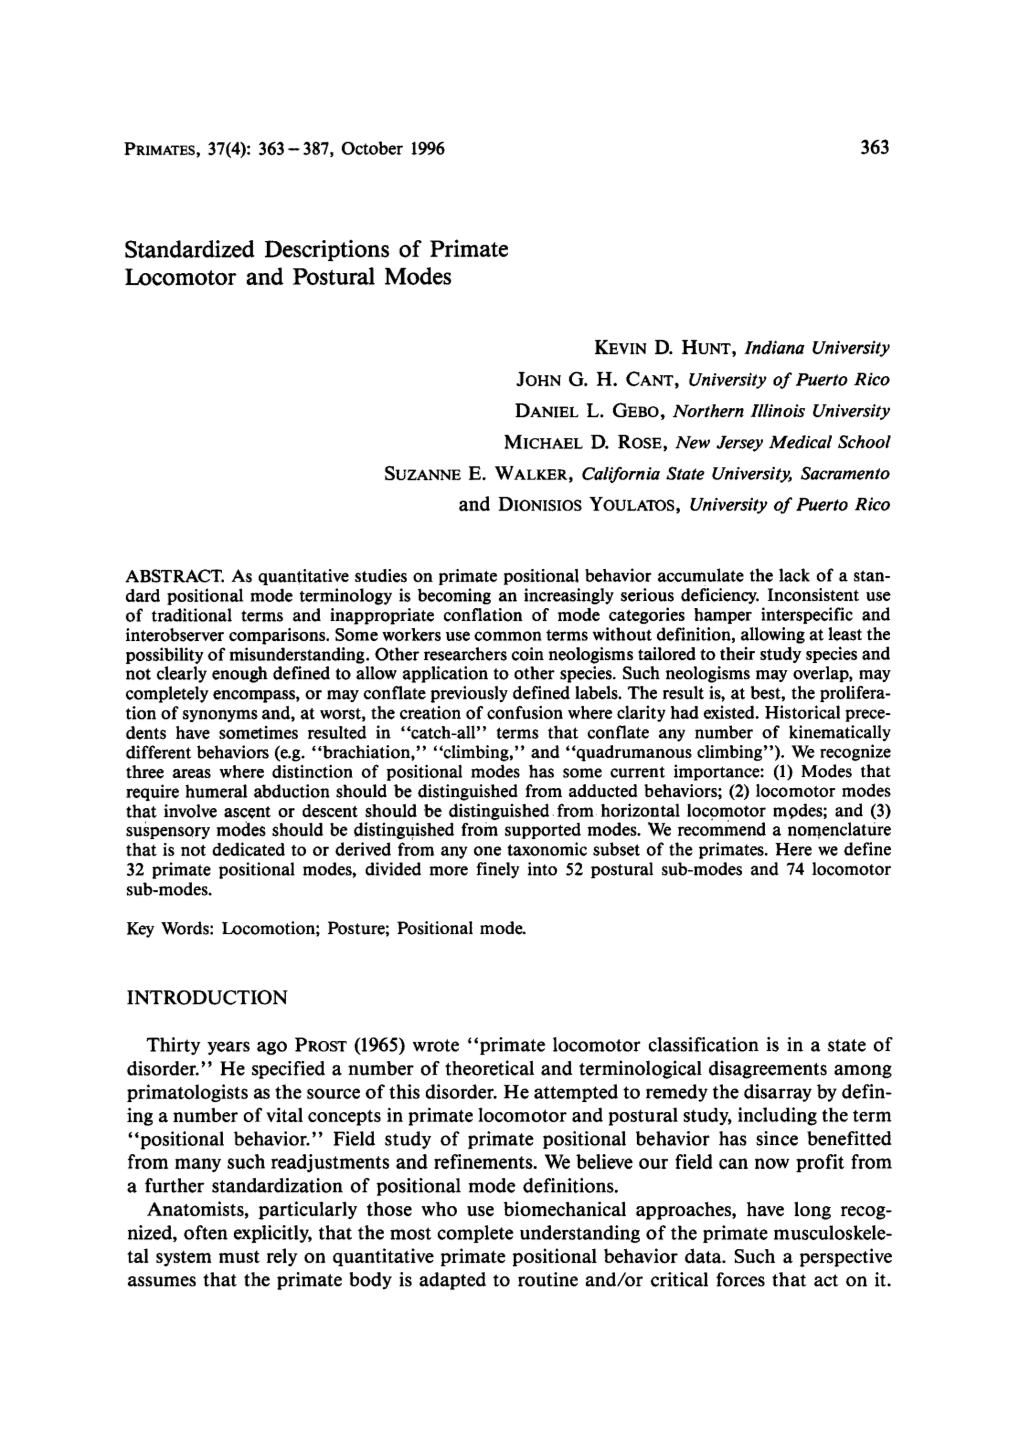 Standardized Descriptions of Primate Locomotor and Postural Modes